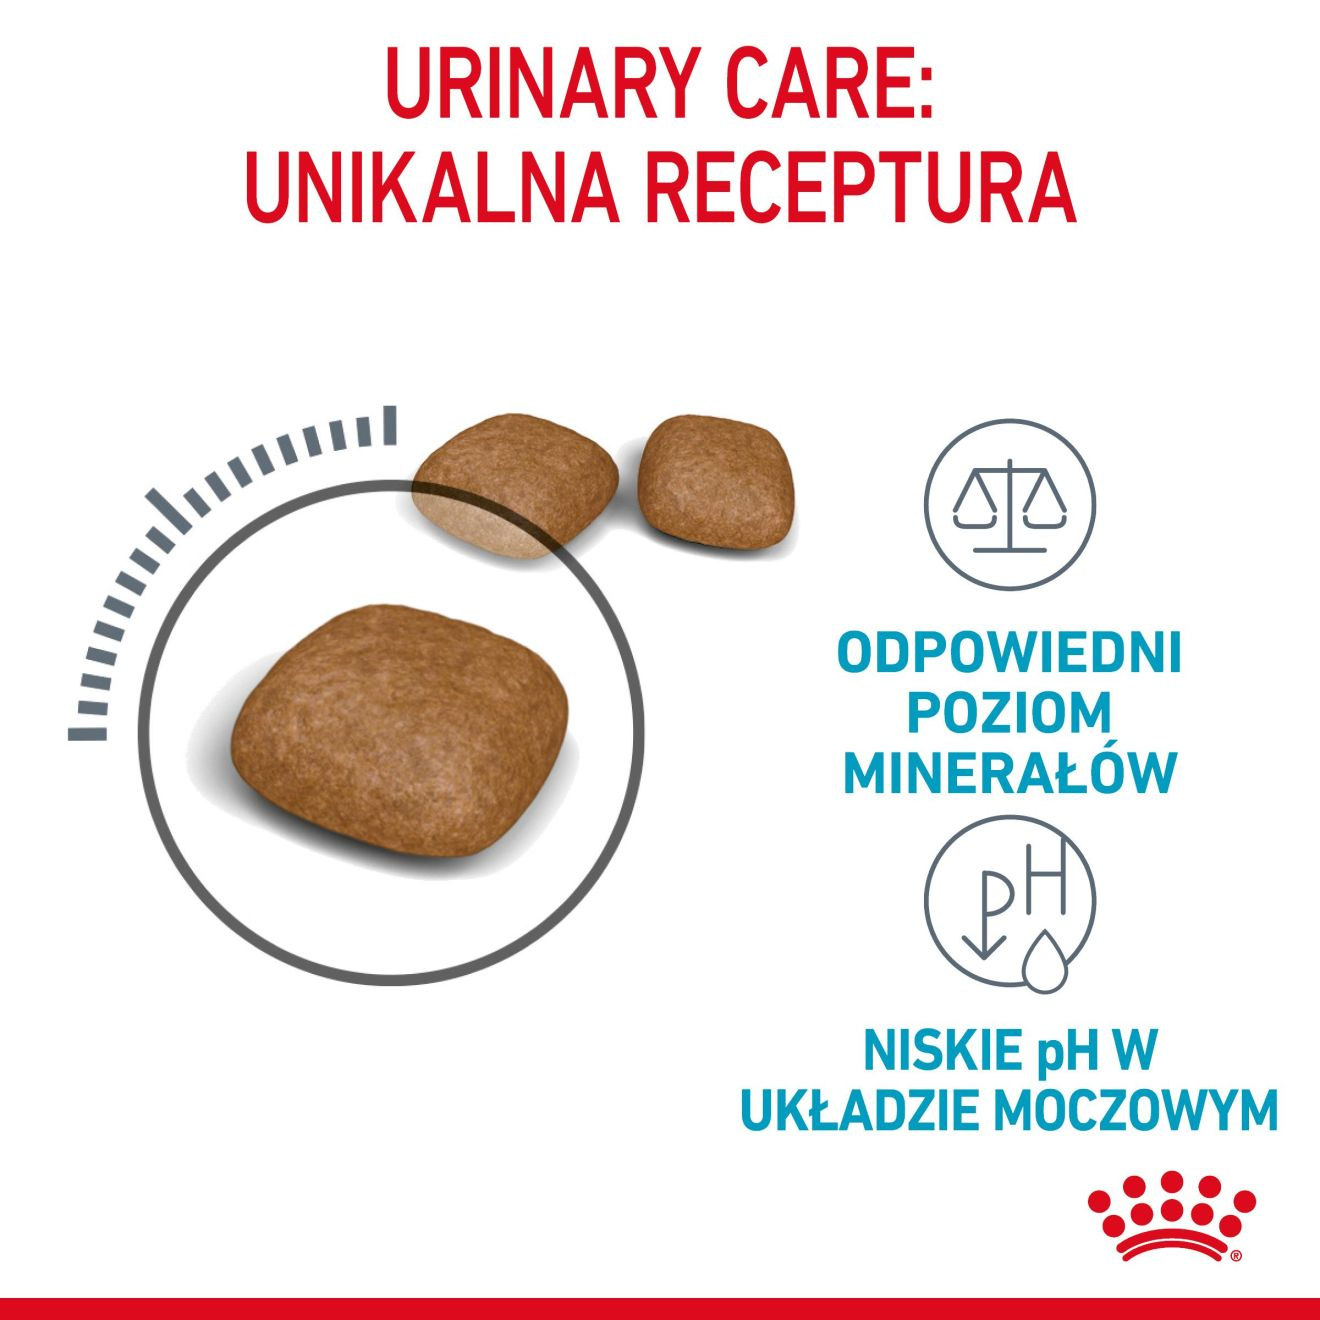 Urinary care